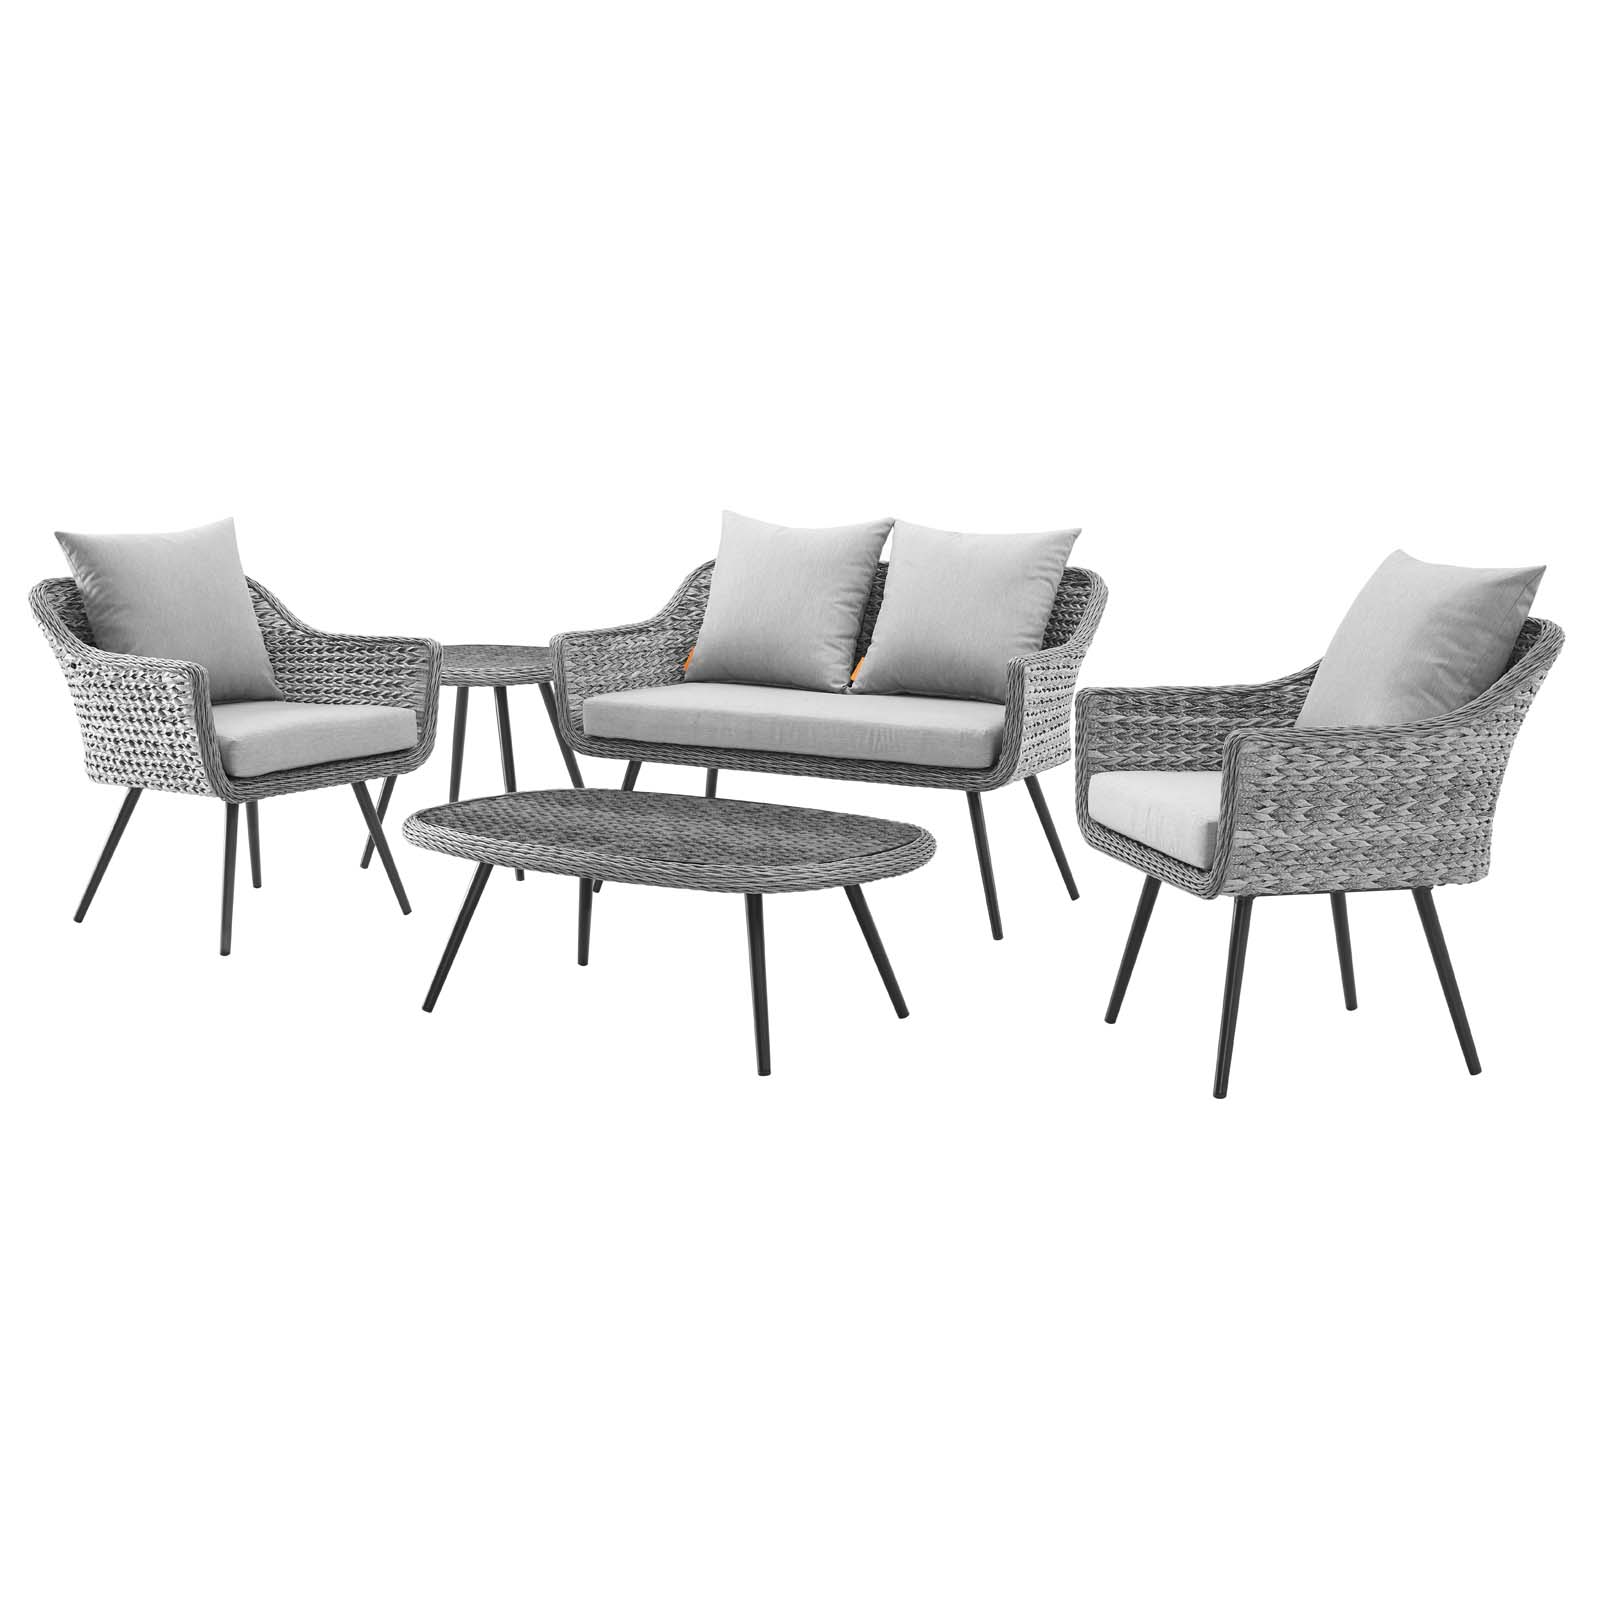 Contemporary Modern Urban Designer Outdoor Patio Balcony Garden Furniture Lounge Sofa, Chair and Coffee Table Set, Aluminum Fabric Wicker Rattan, Grey Gray - image 1 of 9